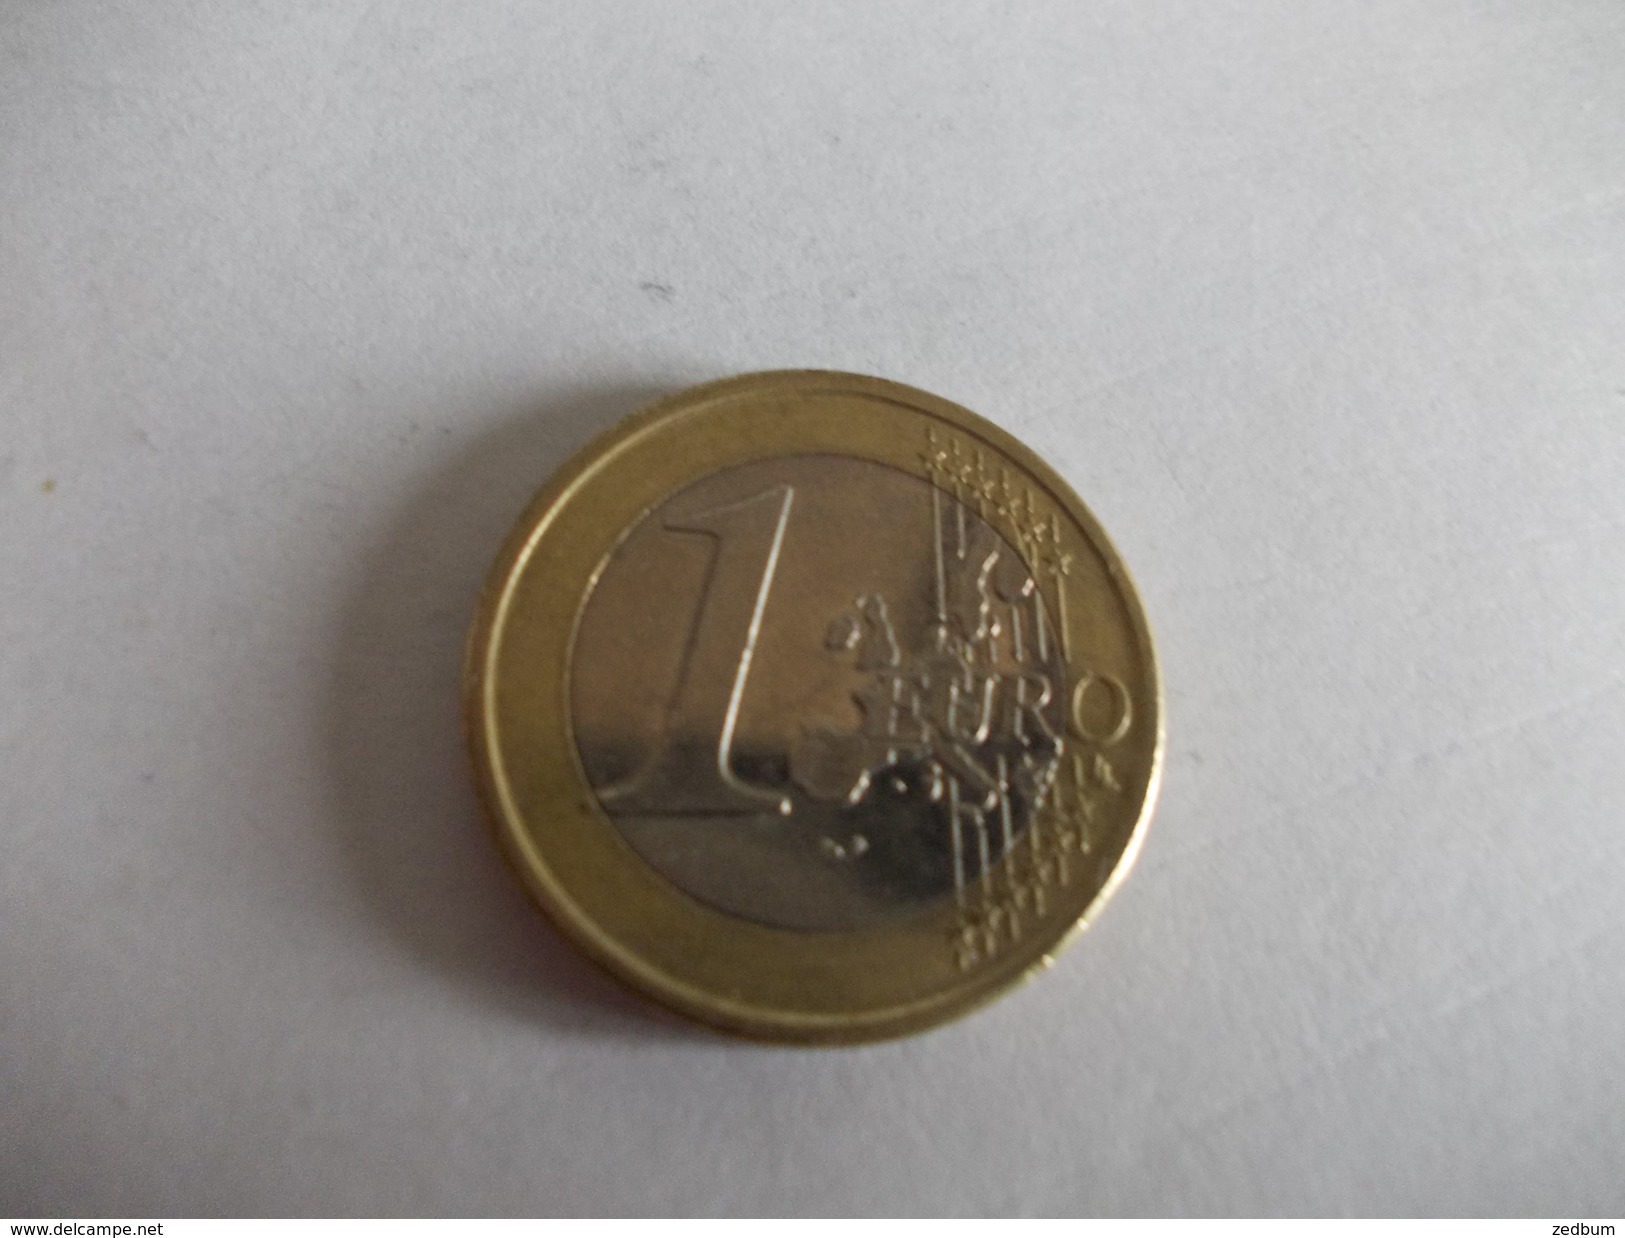 Monnaie Pièce De 1 Euro De Finlande Année 2002 Valeur Argus 6 &euro; - Finlande